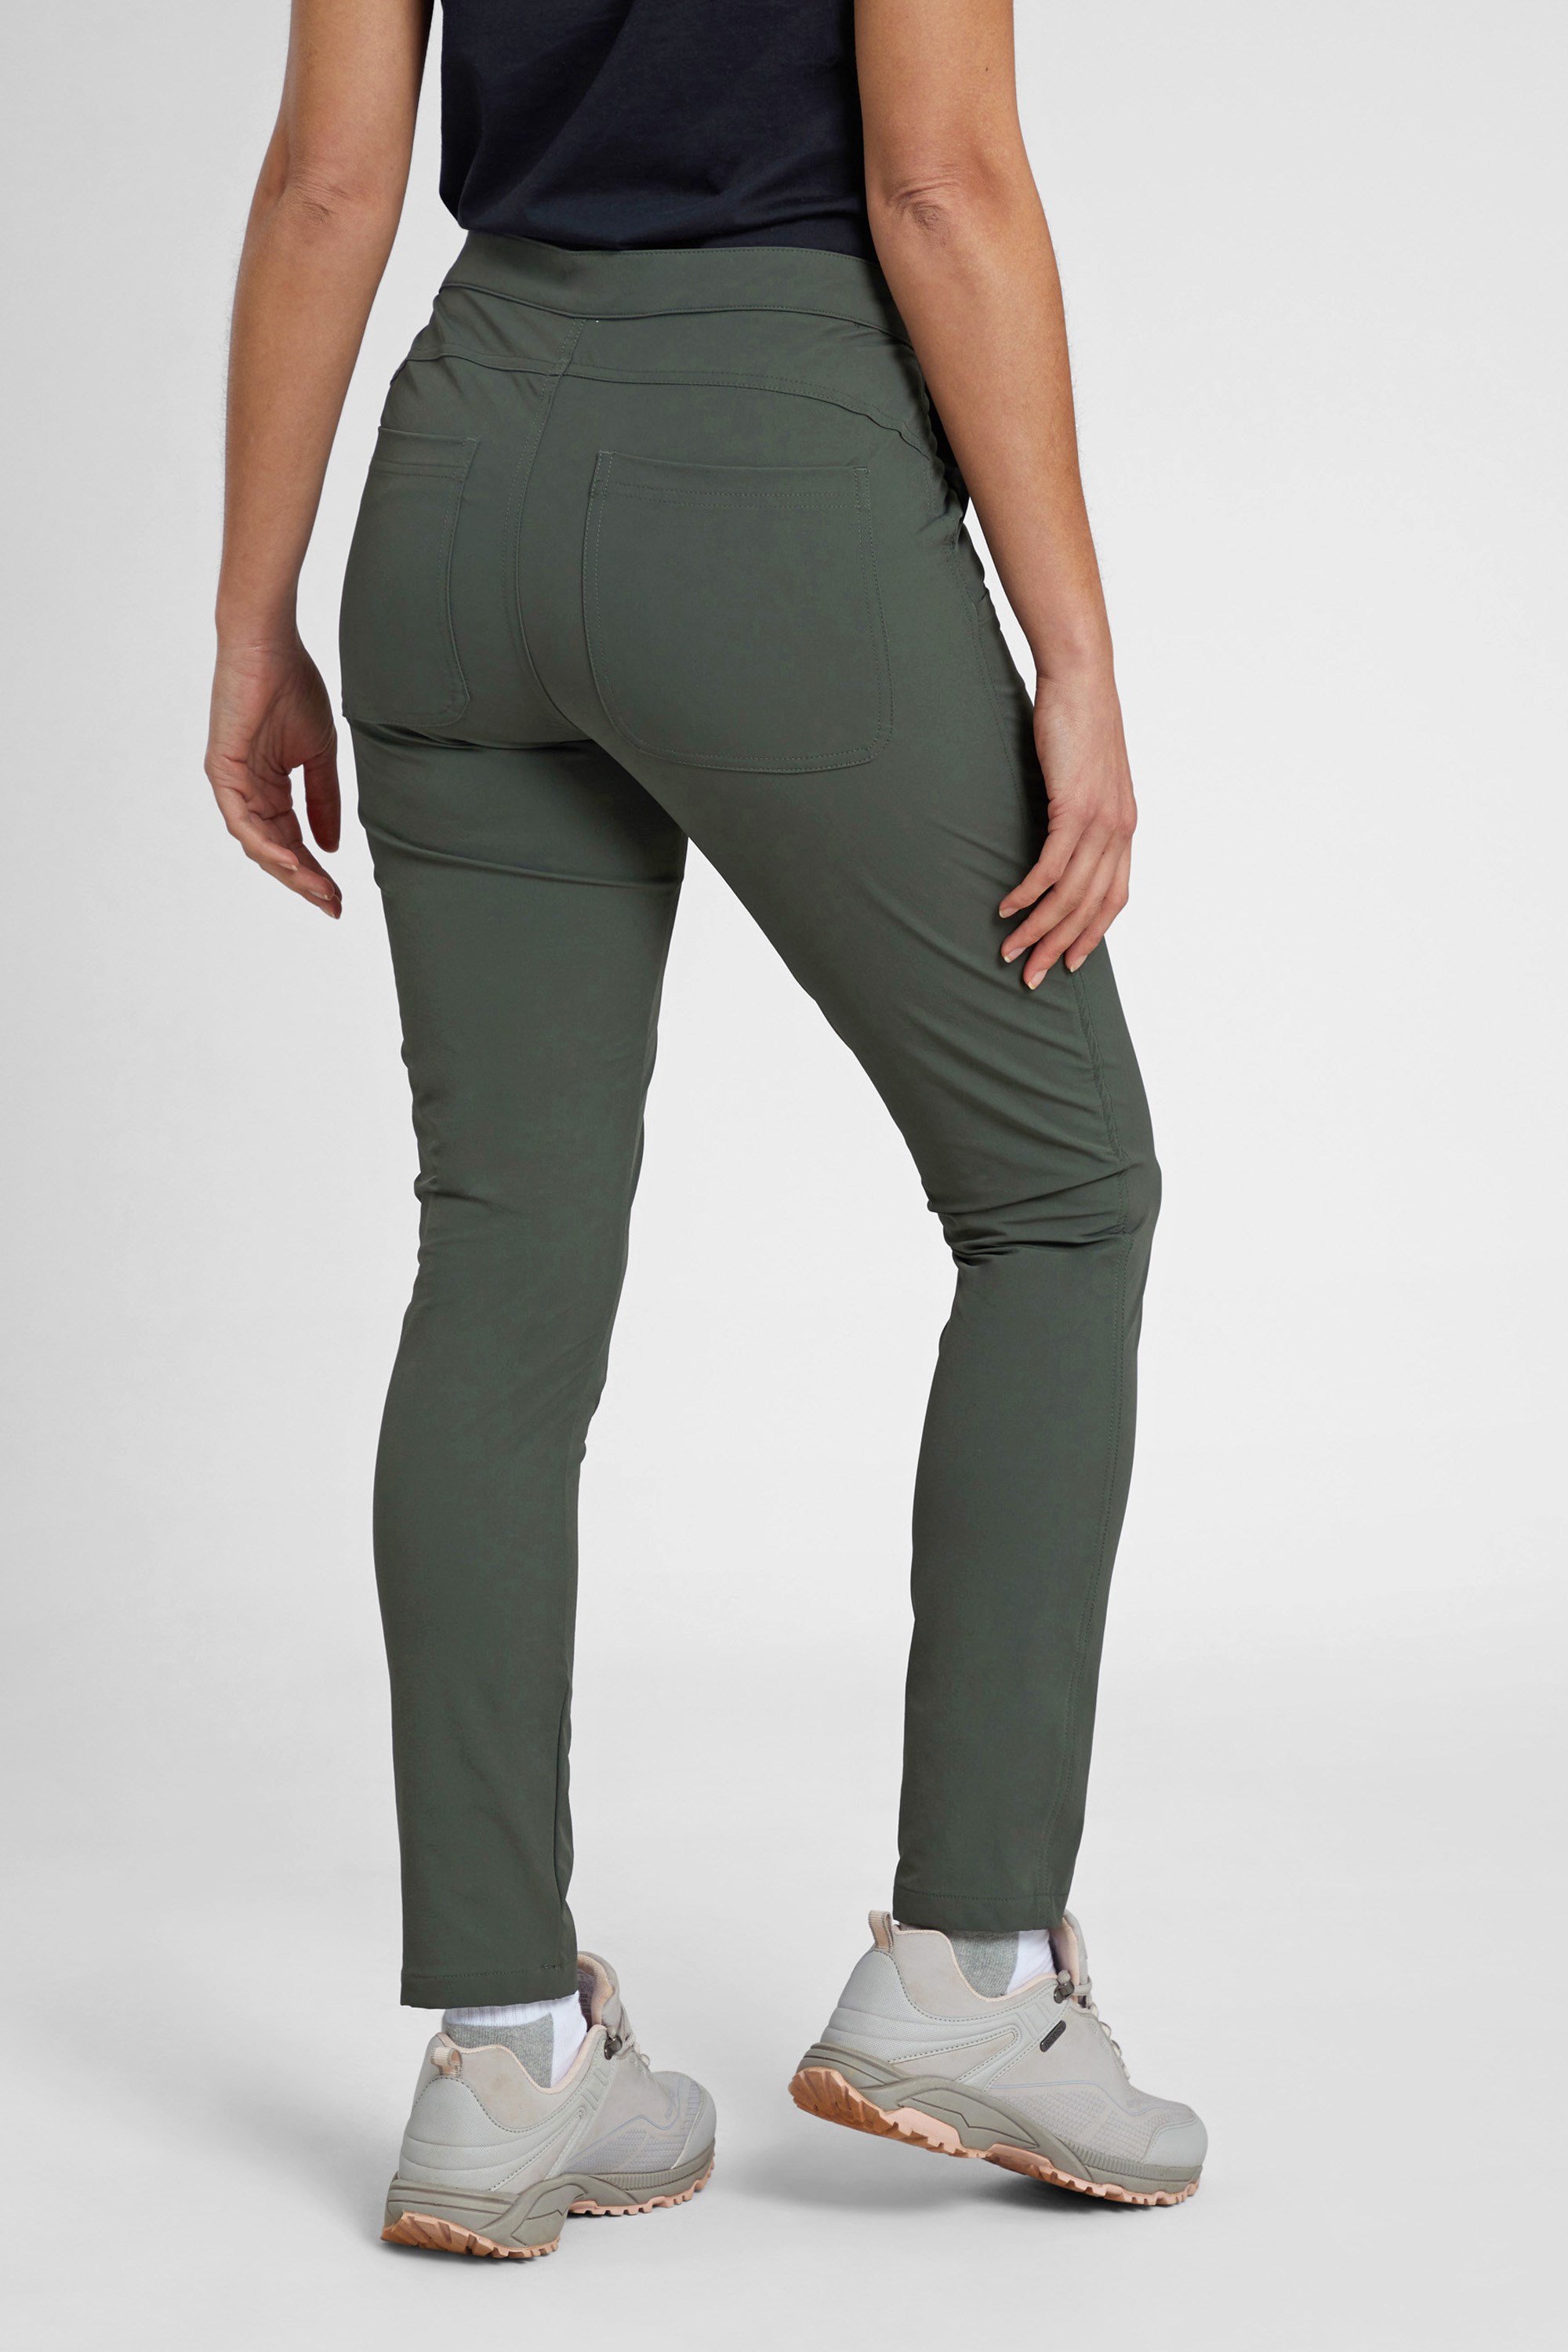 Sports Mountain Warehouse Tech Womens Seamless Pants Slim Fit Ladies Trousers 